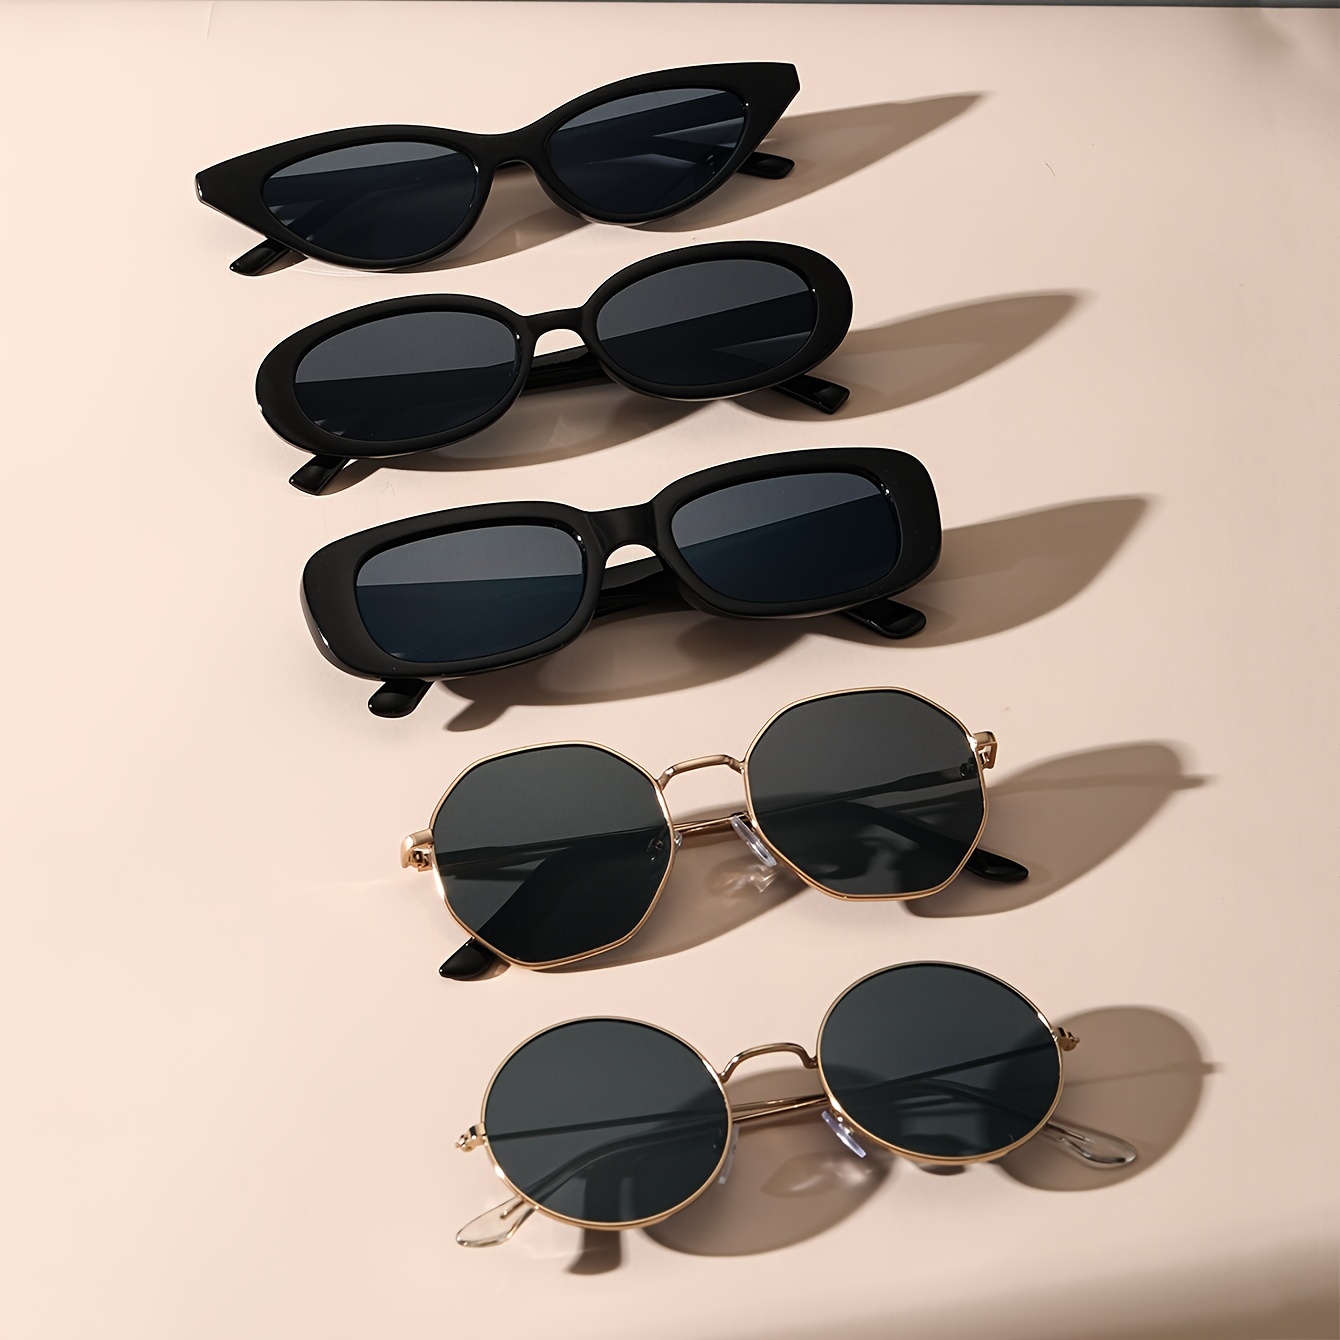 

5pcs Classic Fashion Glasses Fashion Fashion Glasses For Women Men Anti Glare Sun Shades Glasses For Driving Beach Travel